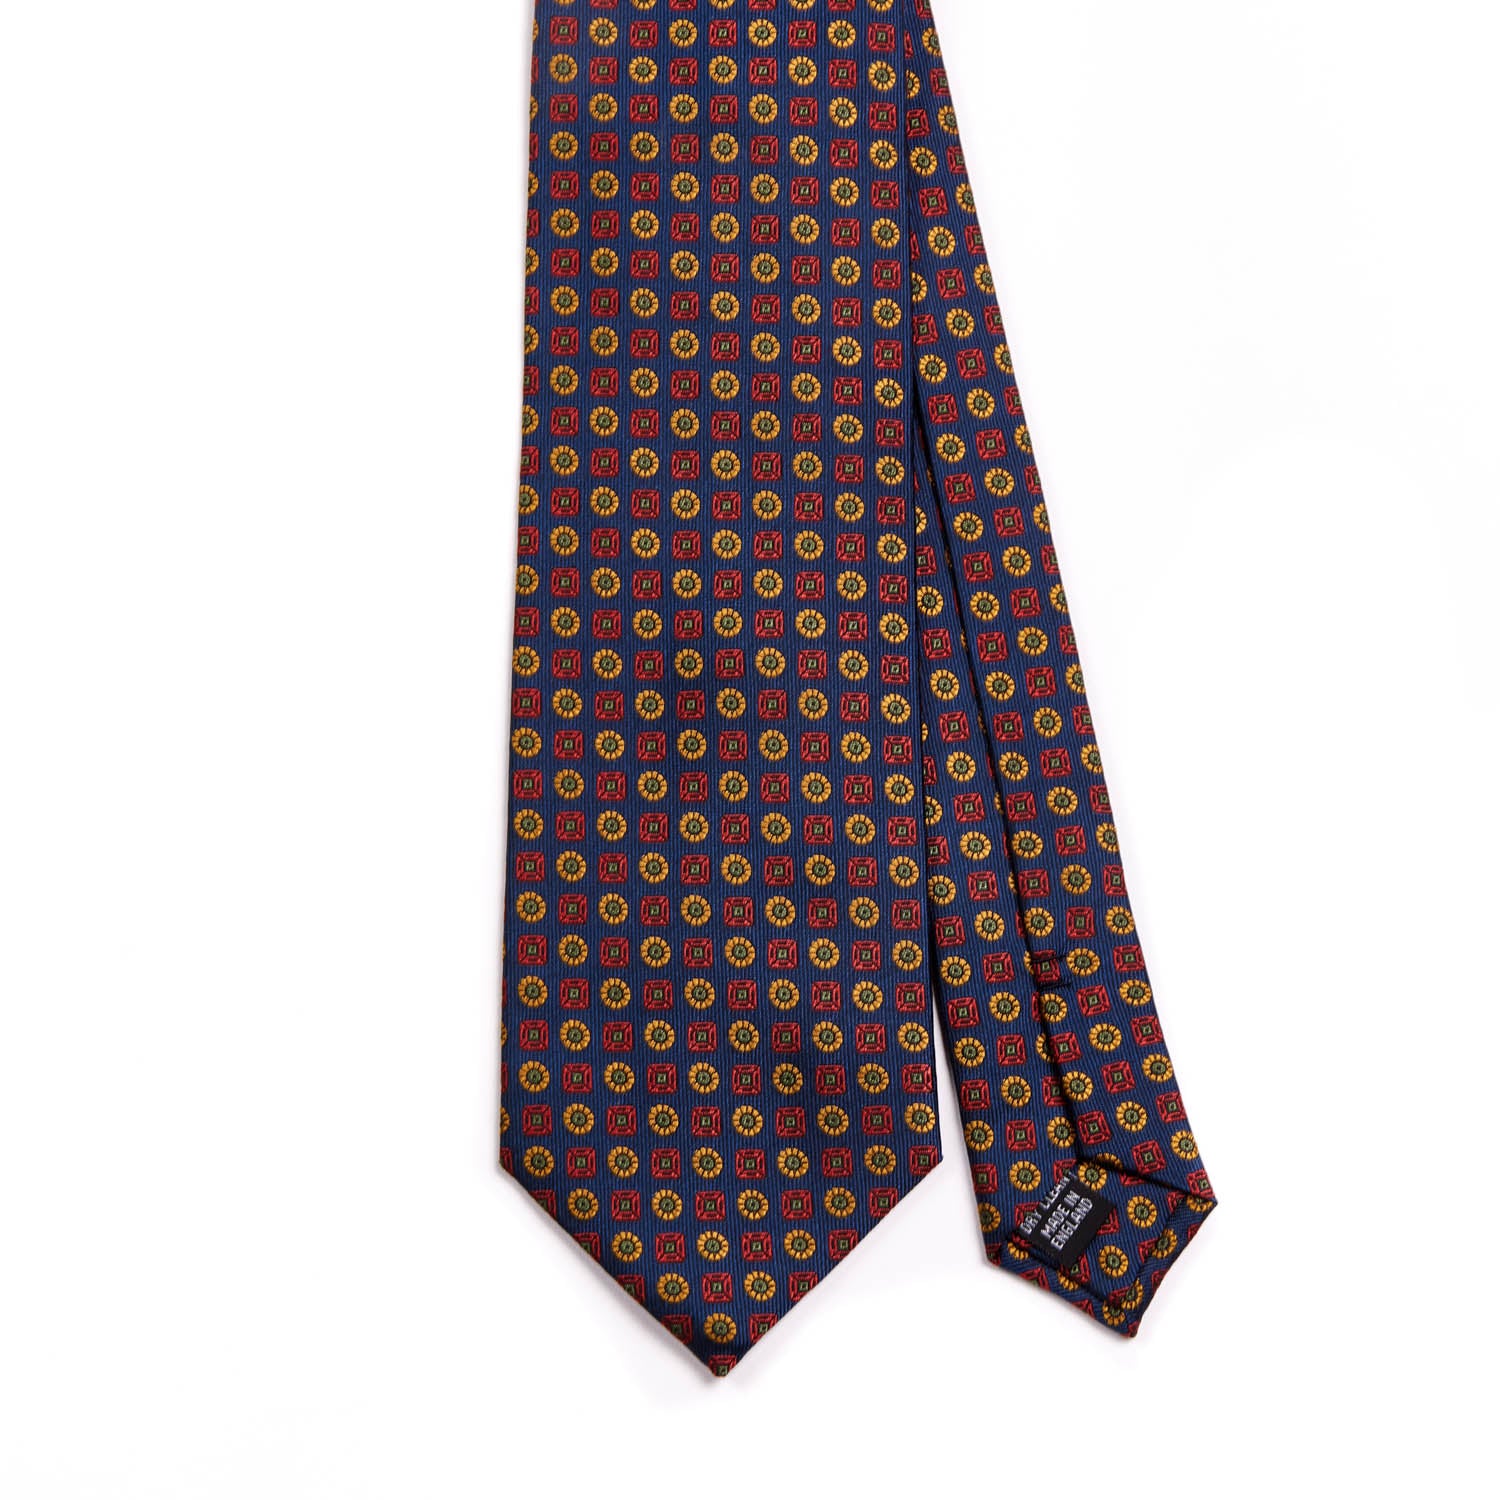 Sovereign Grade Navy Floral Jacquard Tie, 150 cm | KirbyAllison.com